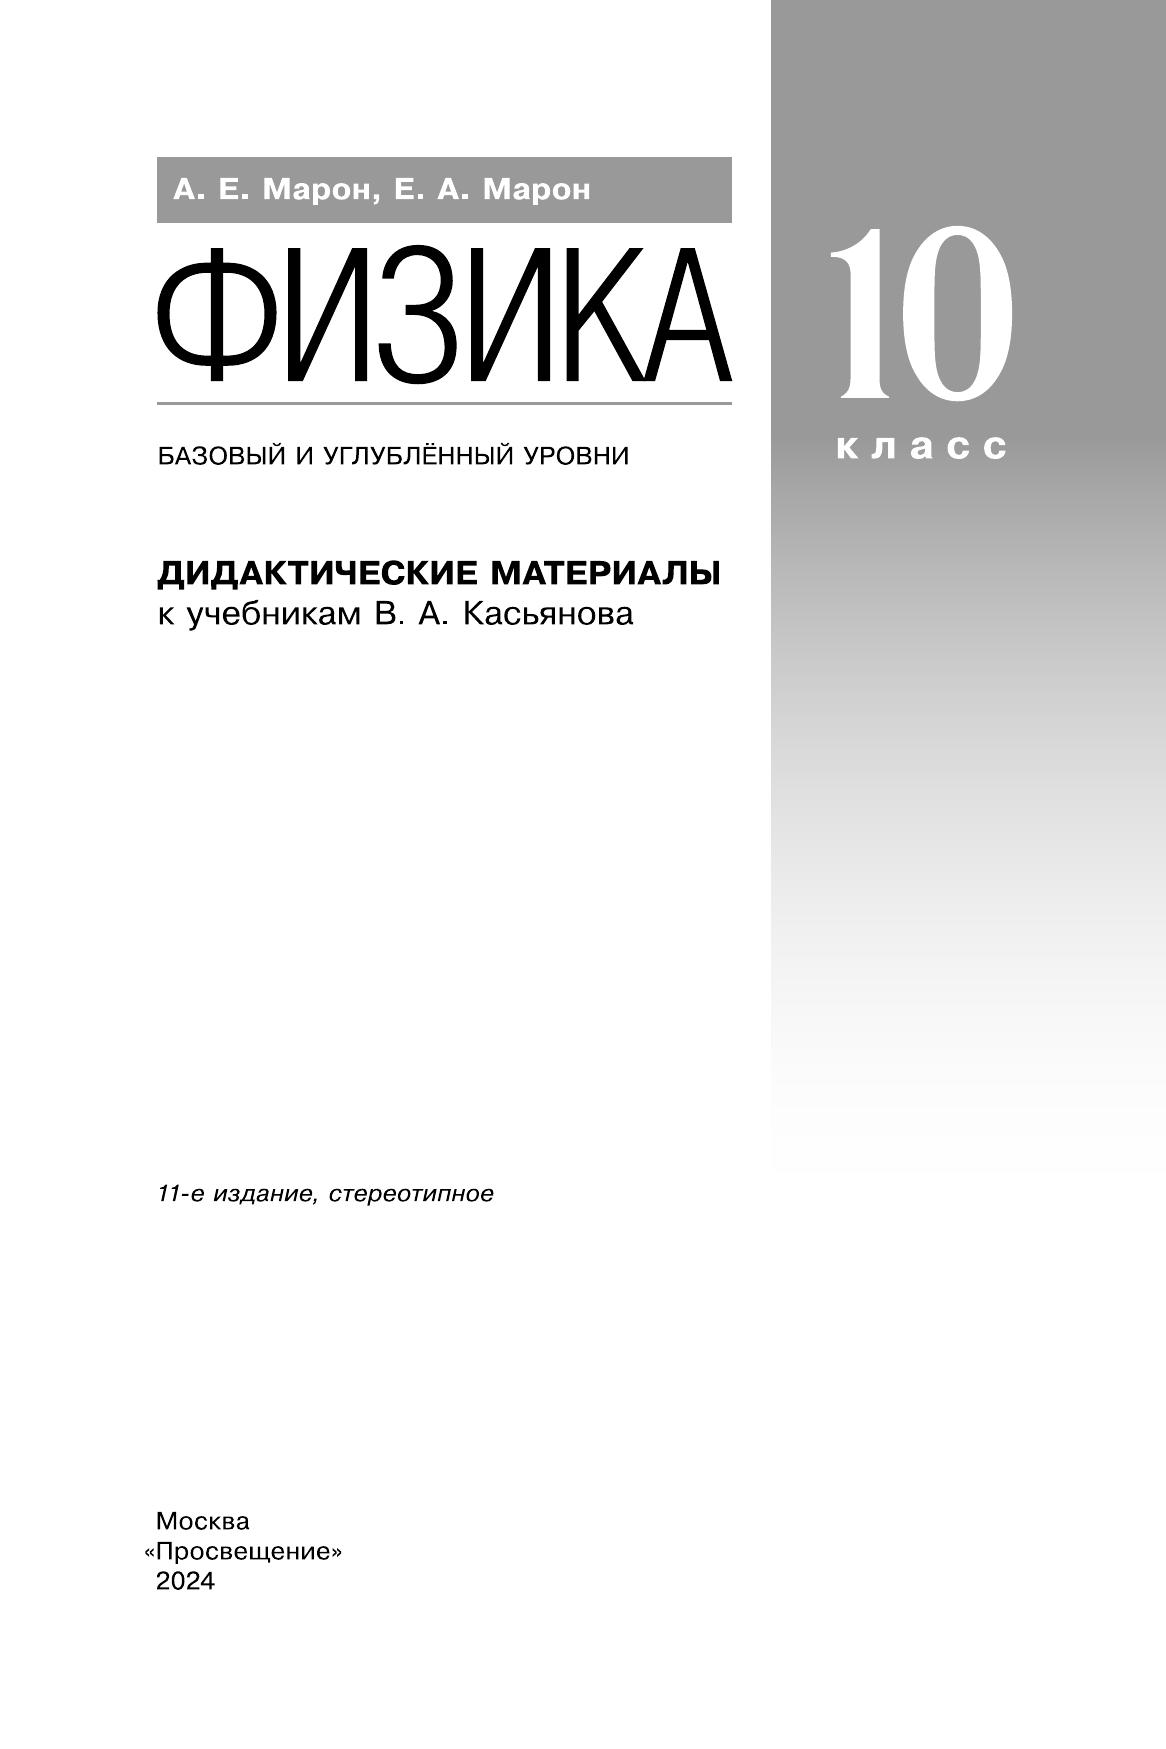 Физика, 10 класс, дидактические материалы, Марон А.Е., Марон Е.А., 2005